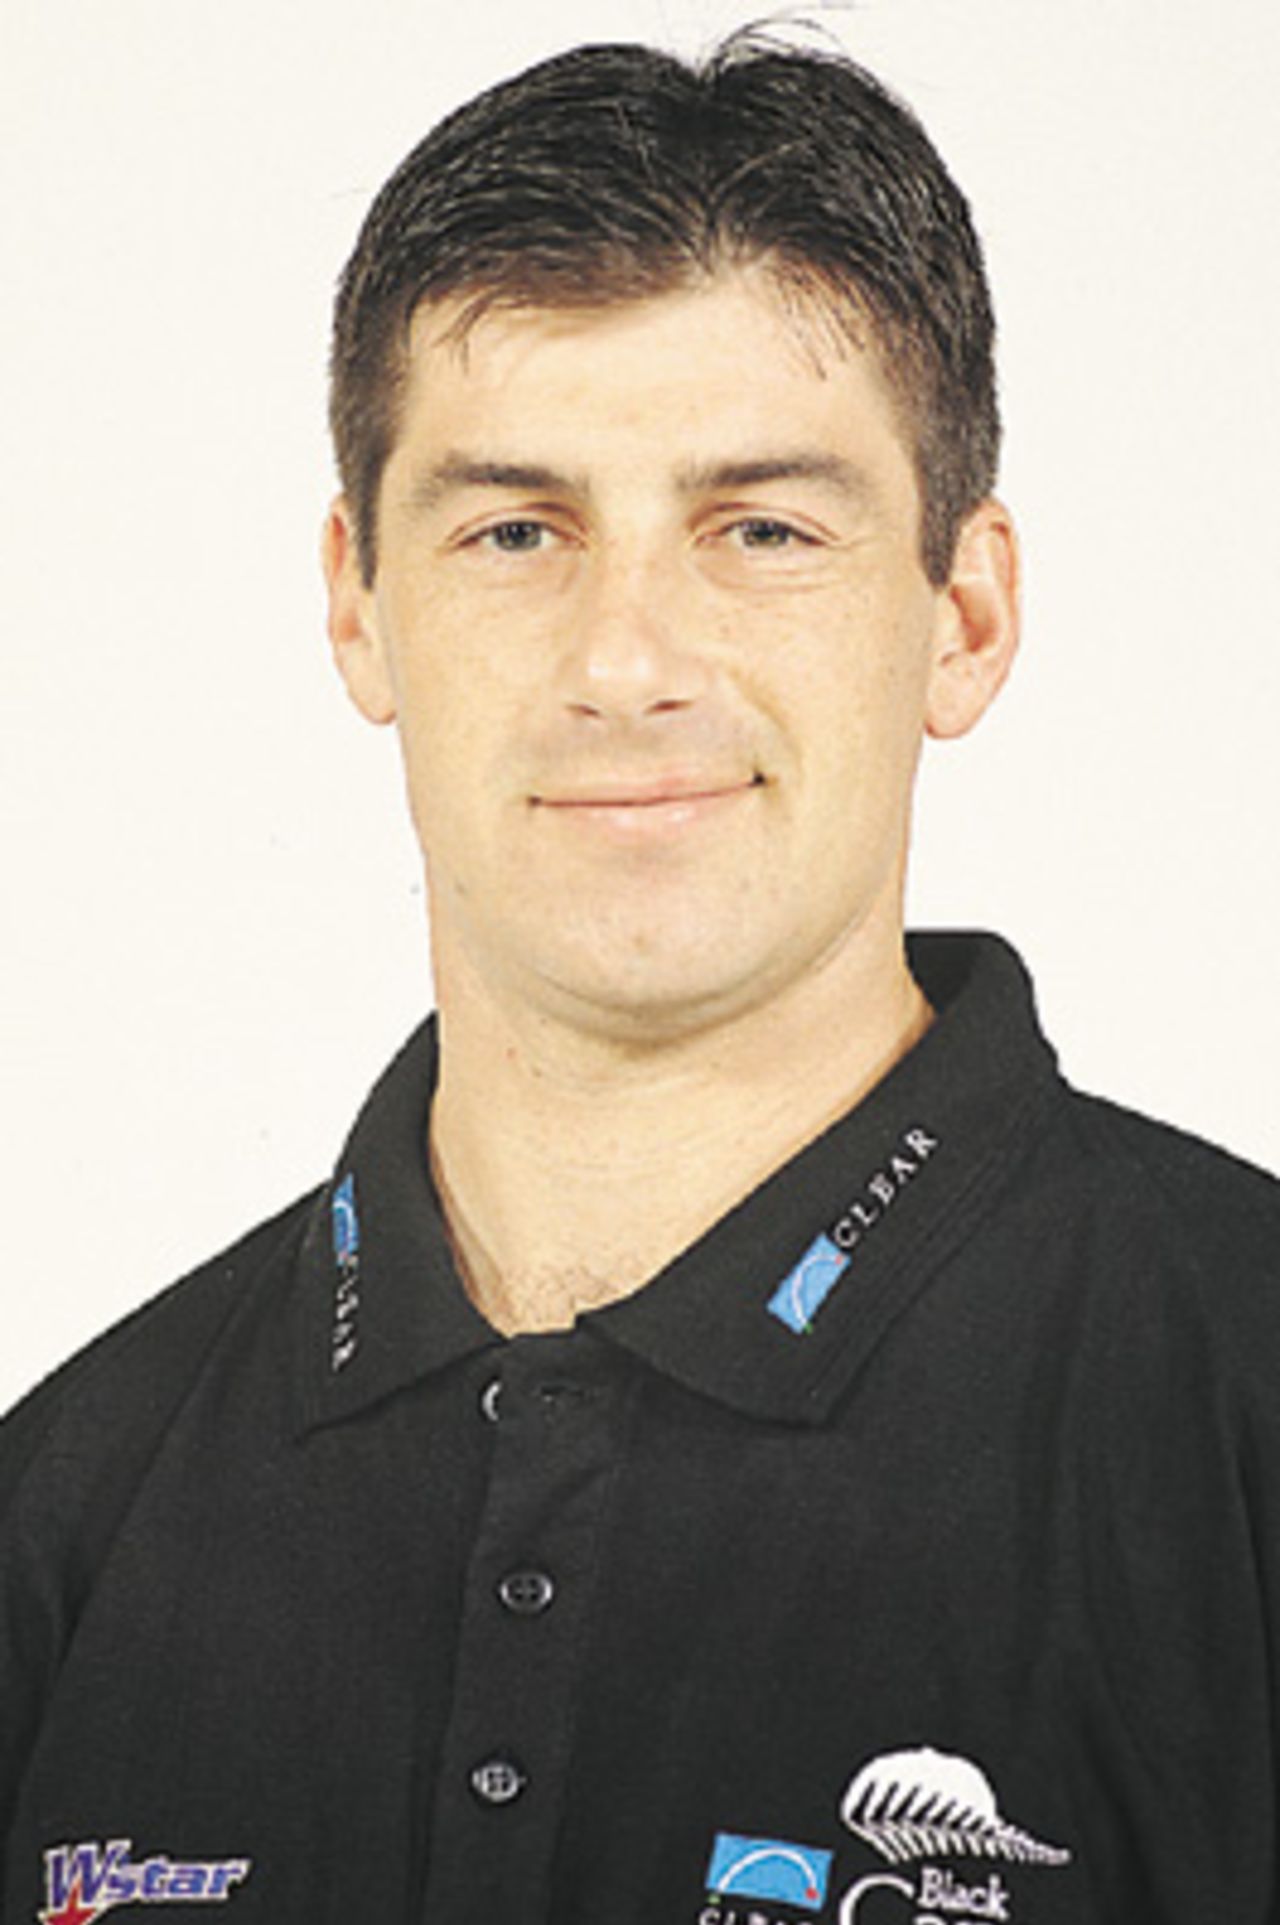 Portrait of Craig Spearman - New Zealand player in the 2000/01 season